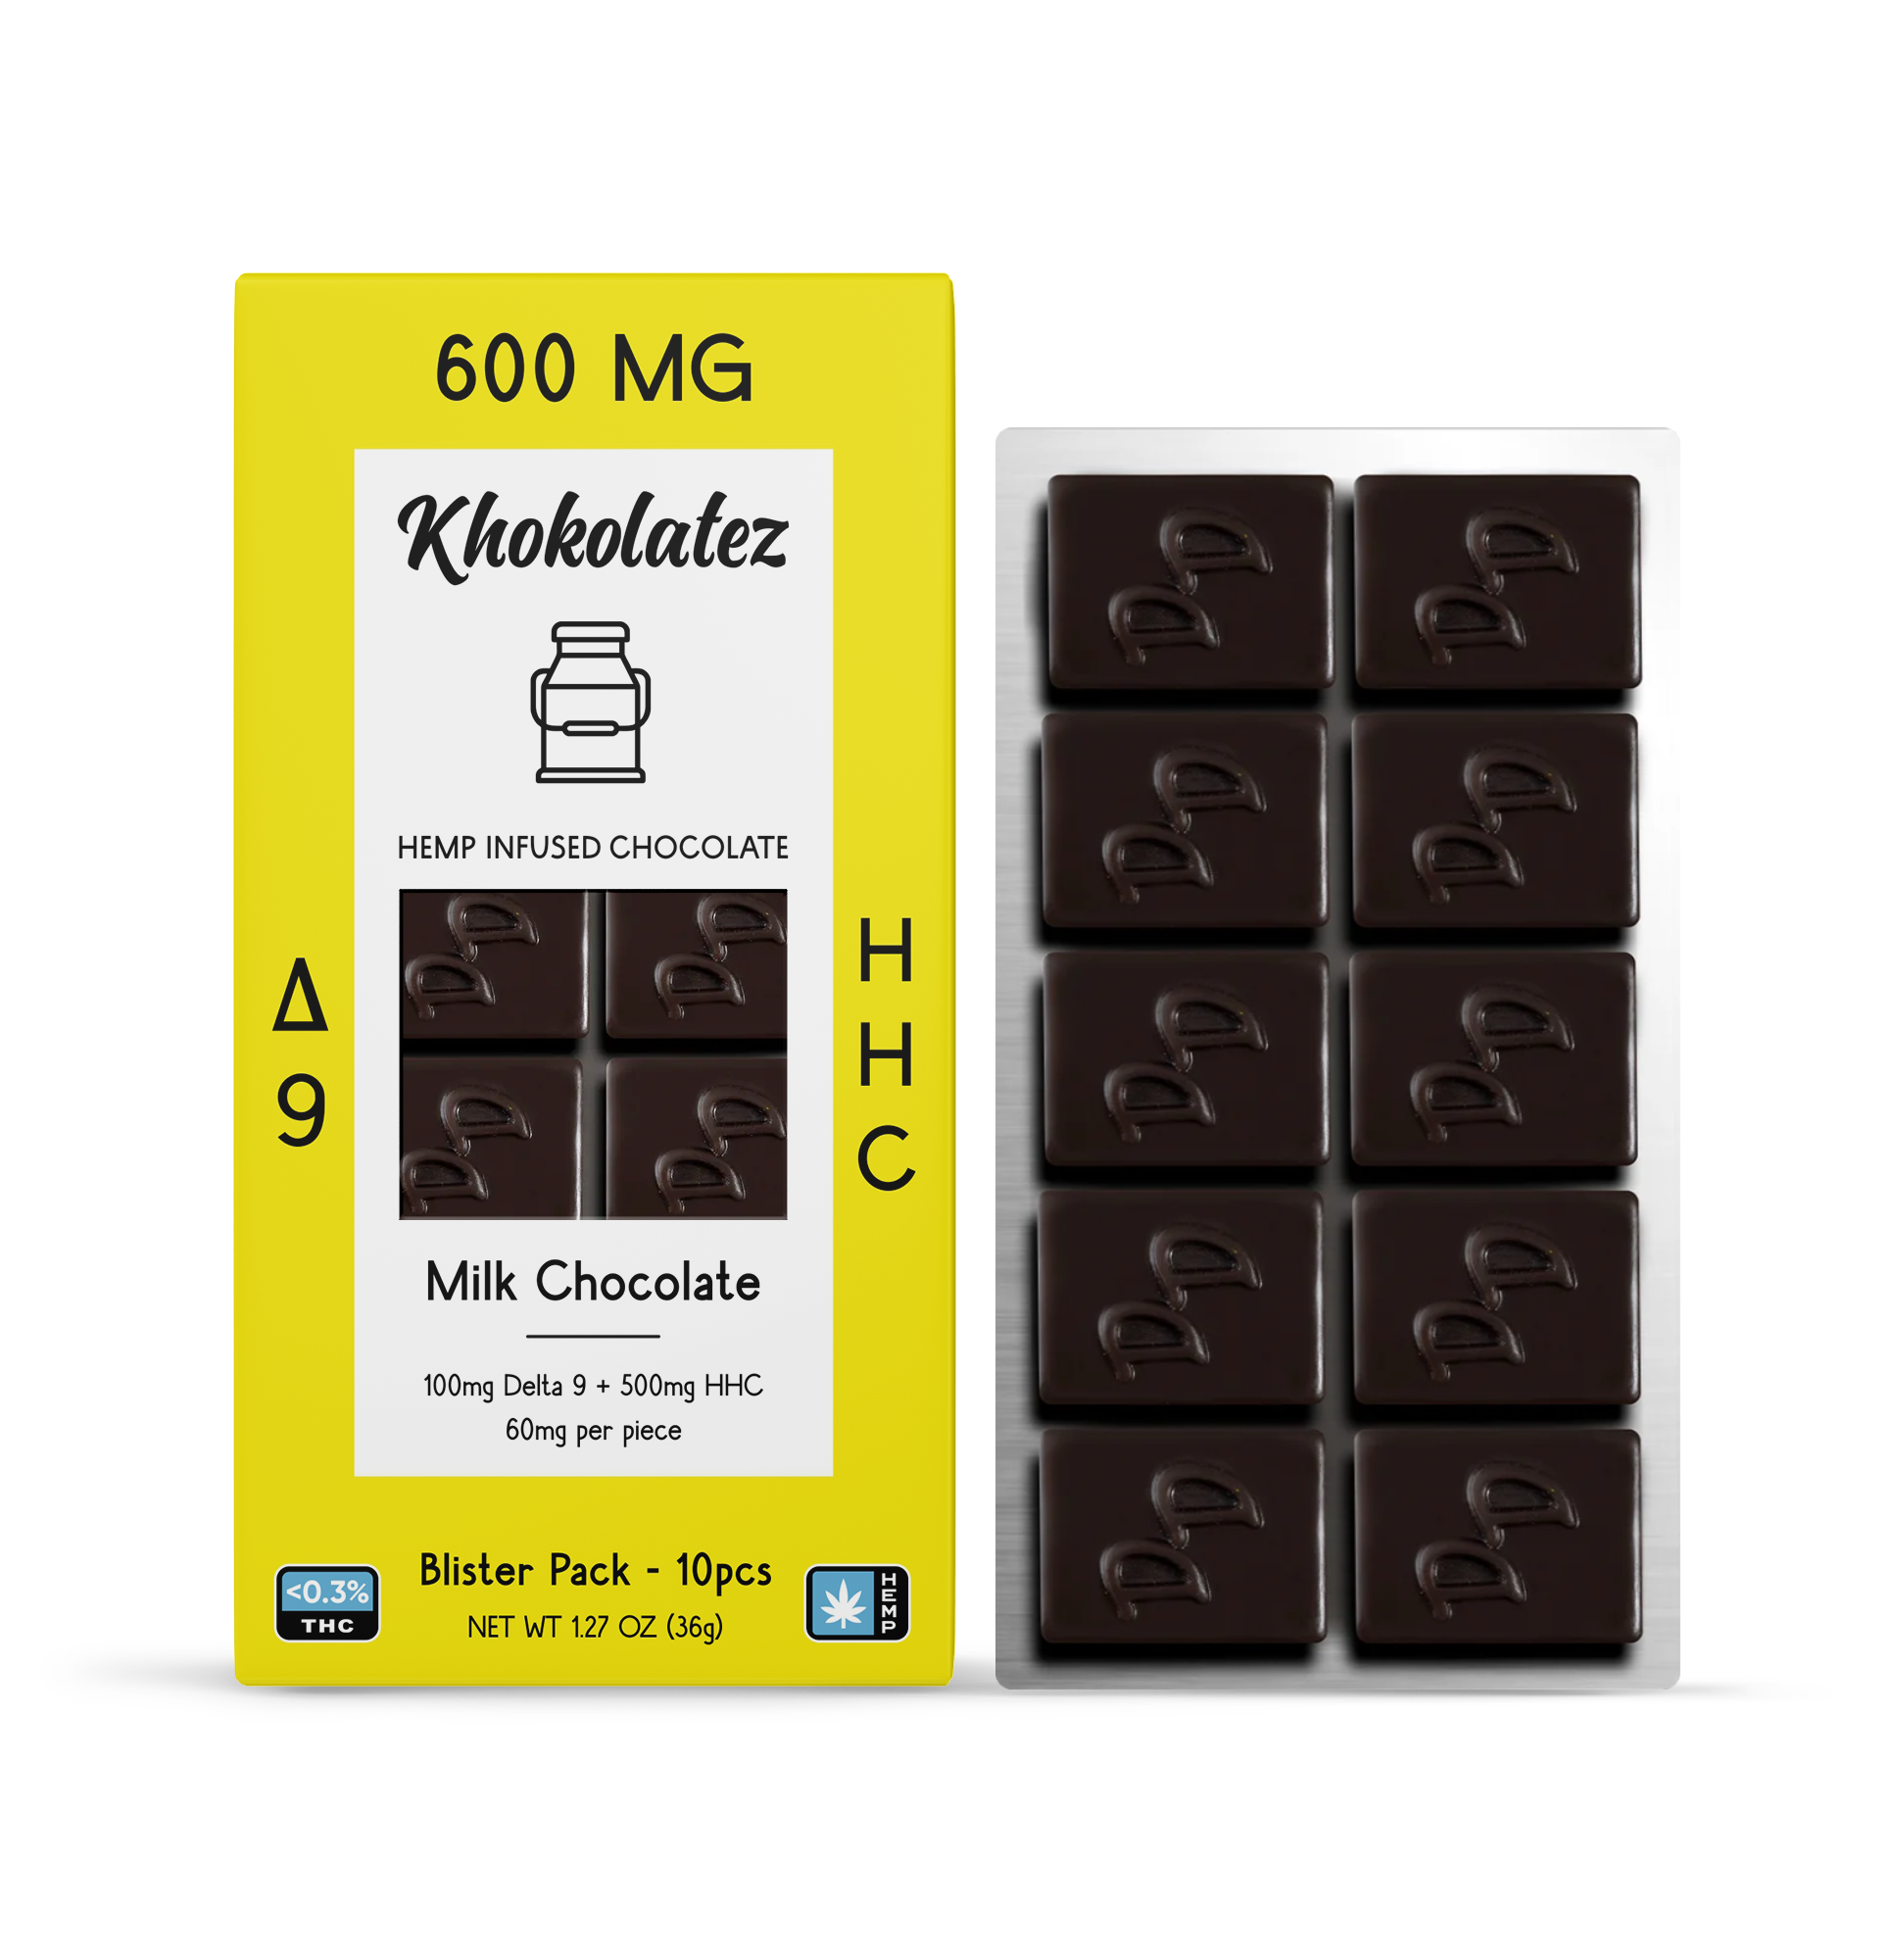 Khokolatez Delta 9 + HHC Milk Chocolate - Unit